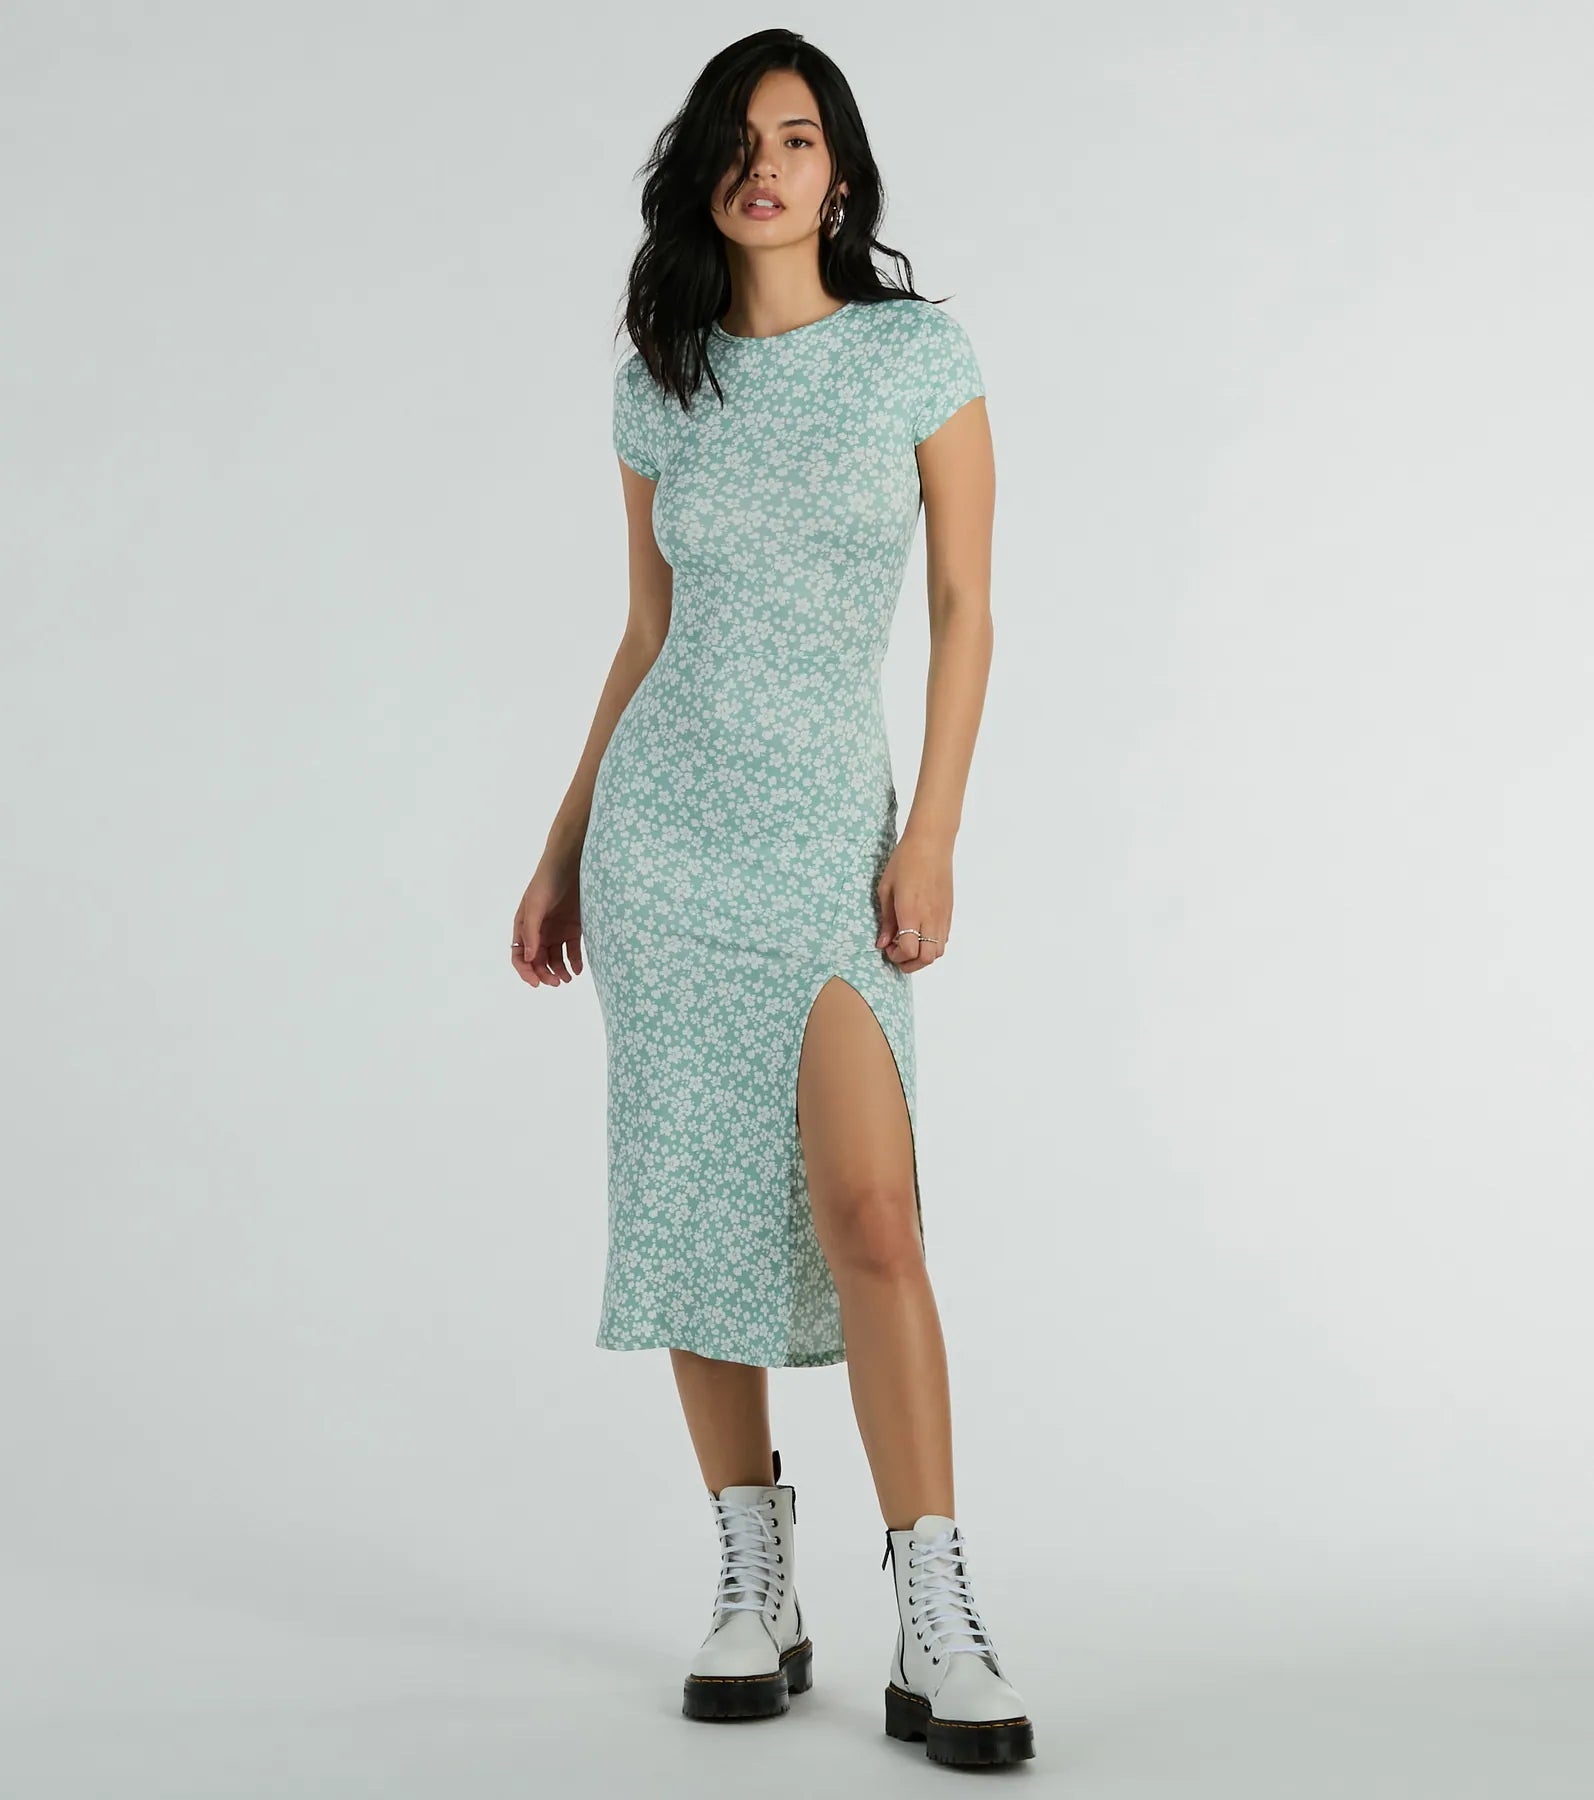 Short Sleeves Sleeves Floral Print Spring Stretchy Cutout Slit Knit Crew Neck Bodycon Dress/Midi Dress